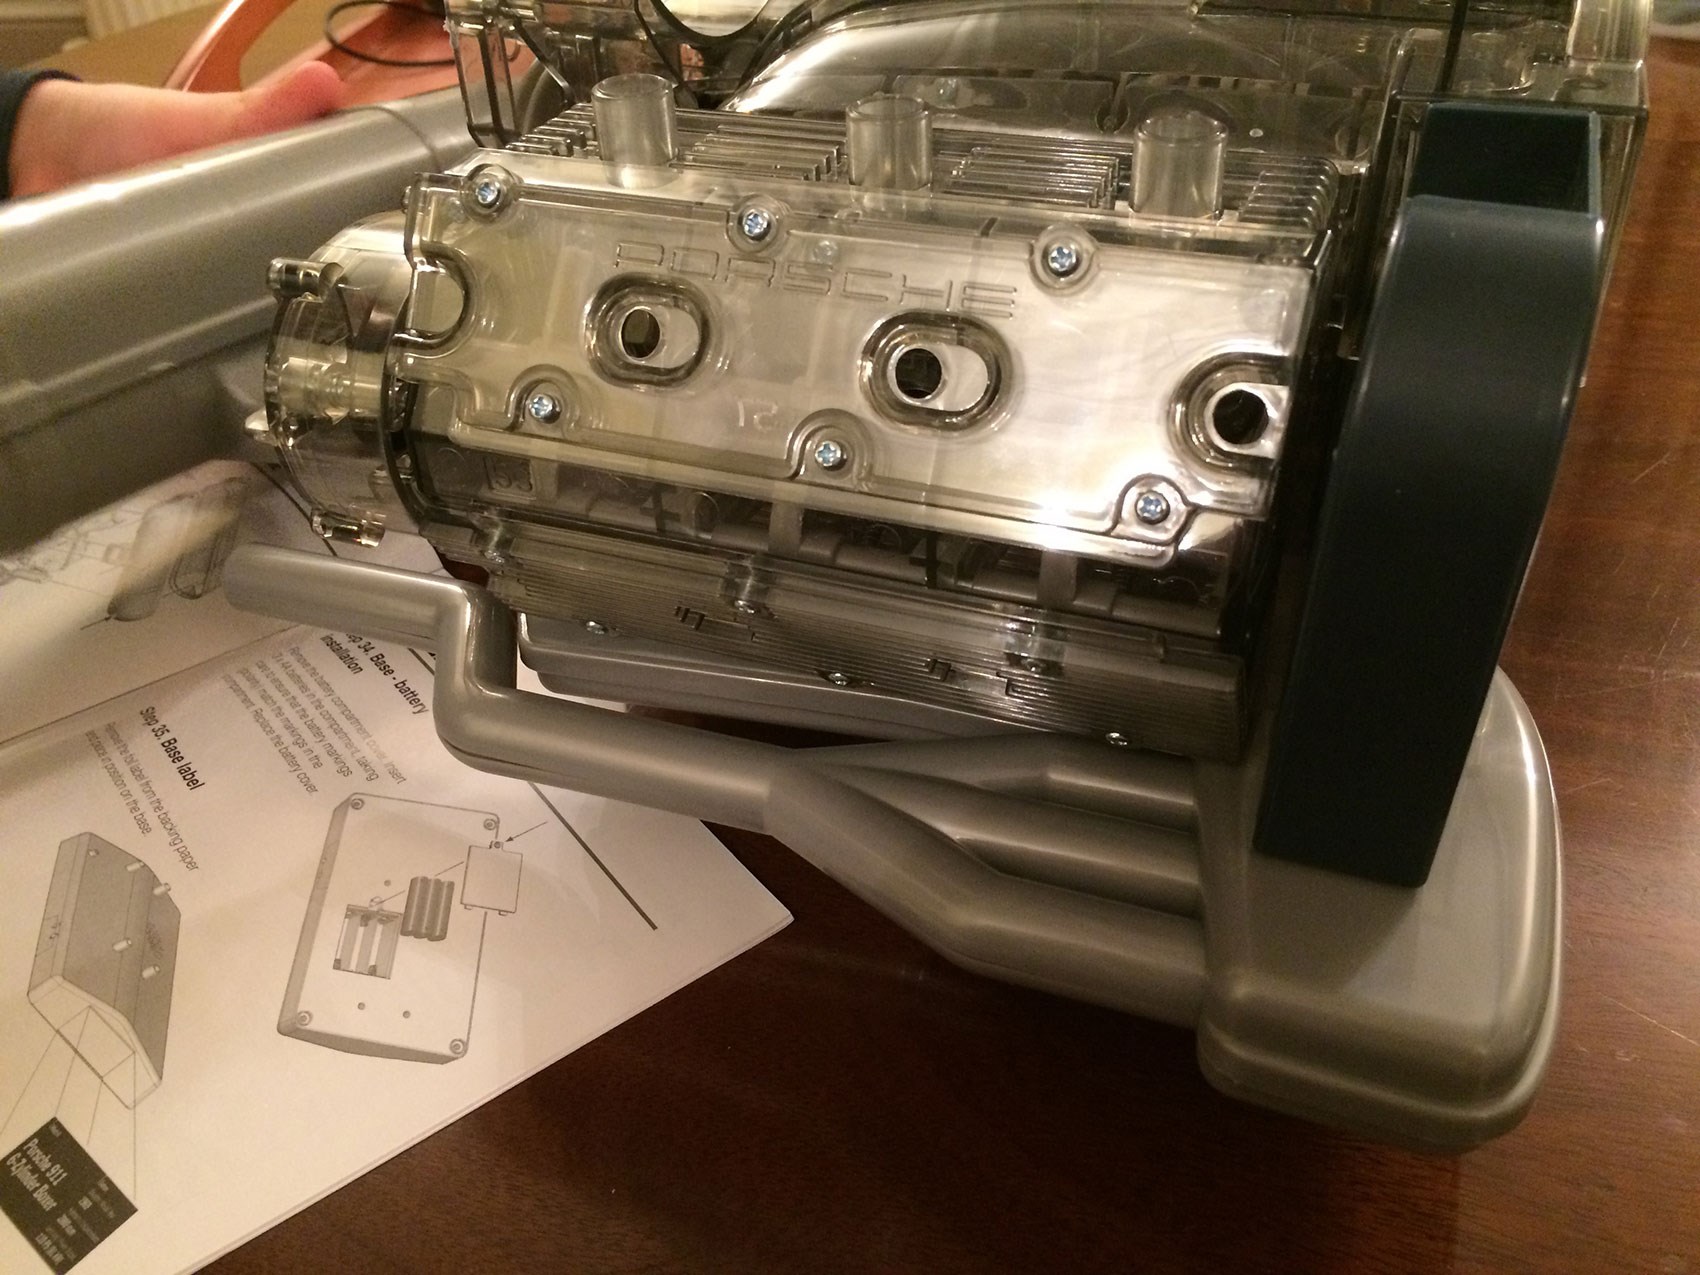 haynes internal combustion engine kit problems